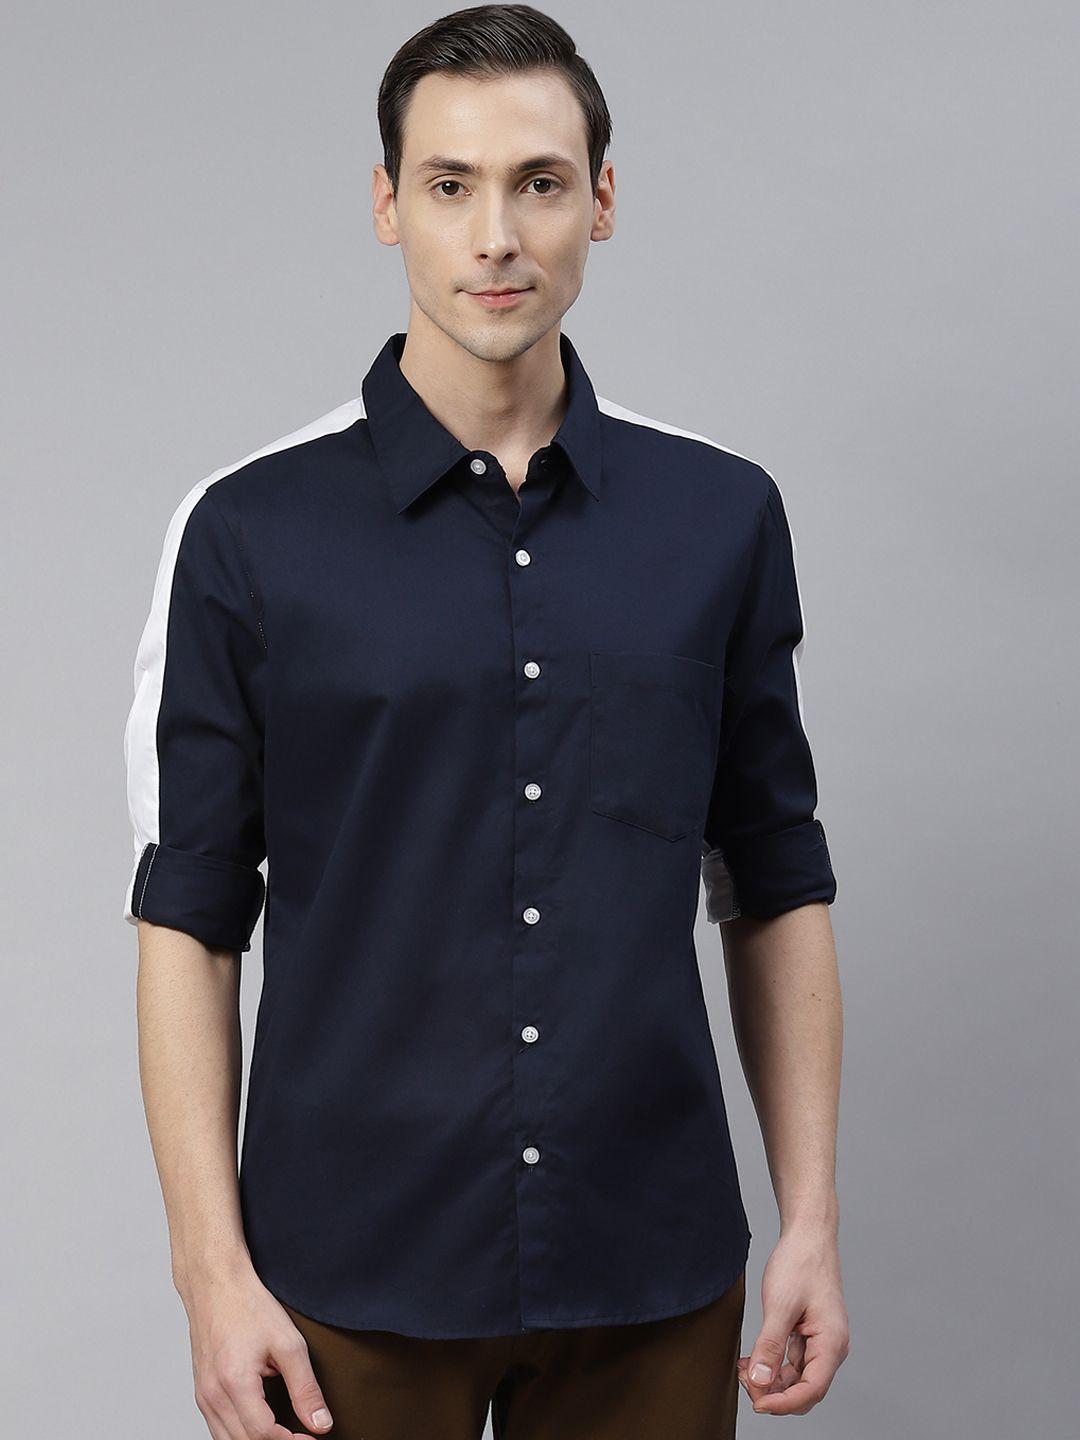 hubberholme men navy blue & white colourblocked twill pure cotton casual shirt